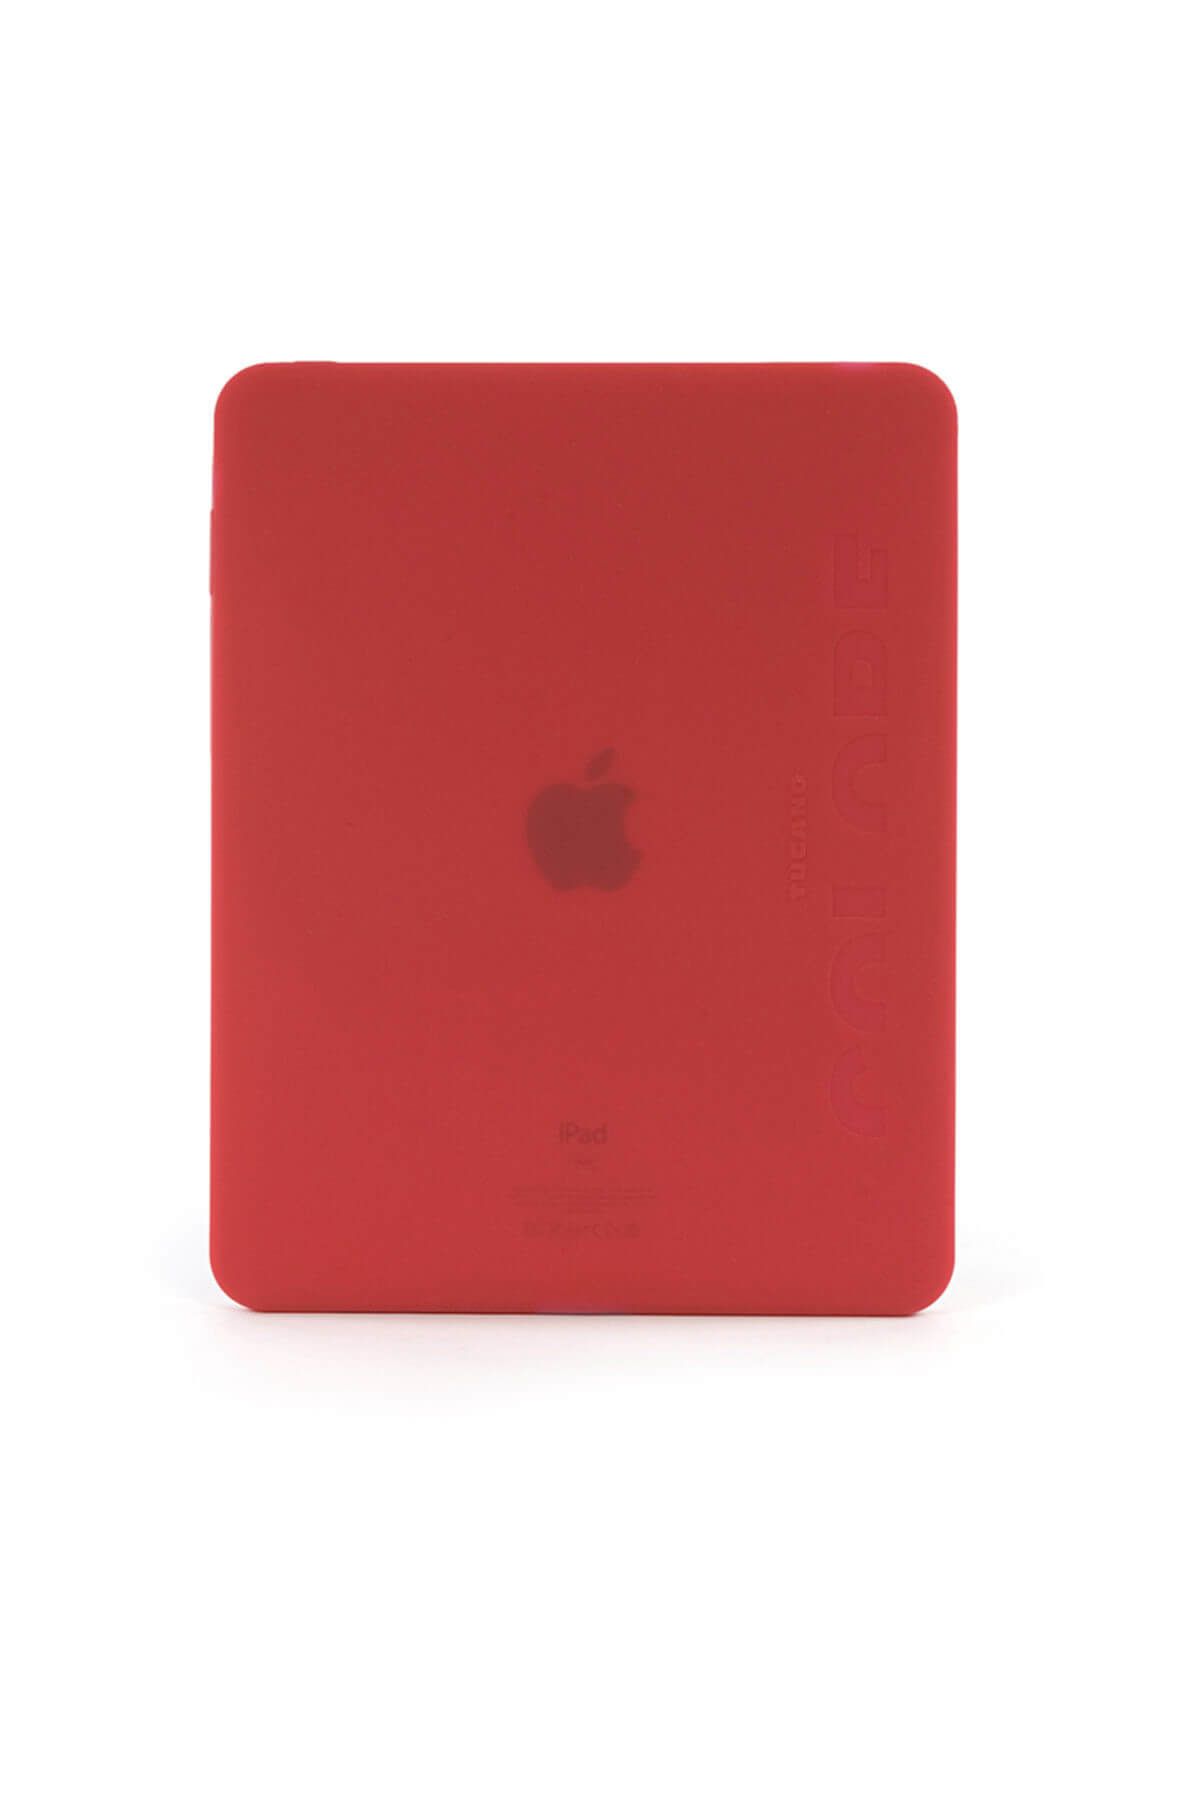 Tucano IPDCS-R Colore iPad 1 ile Uyumlu Silikon Tablet Kılıfı Kırımızı